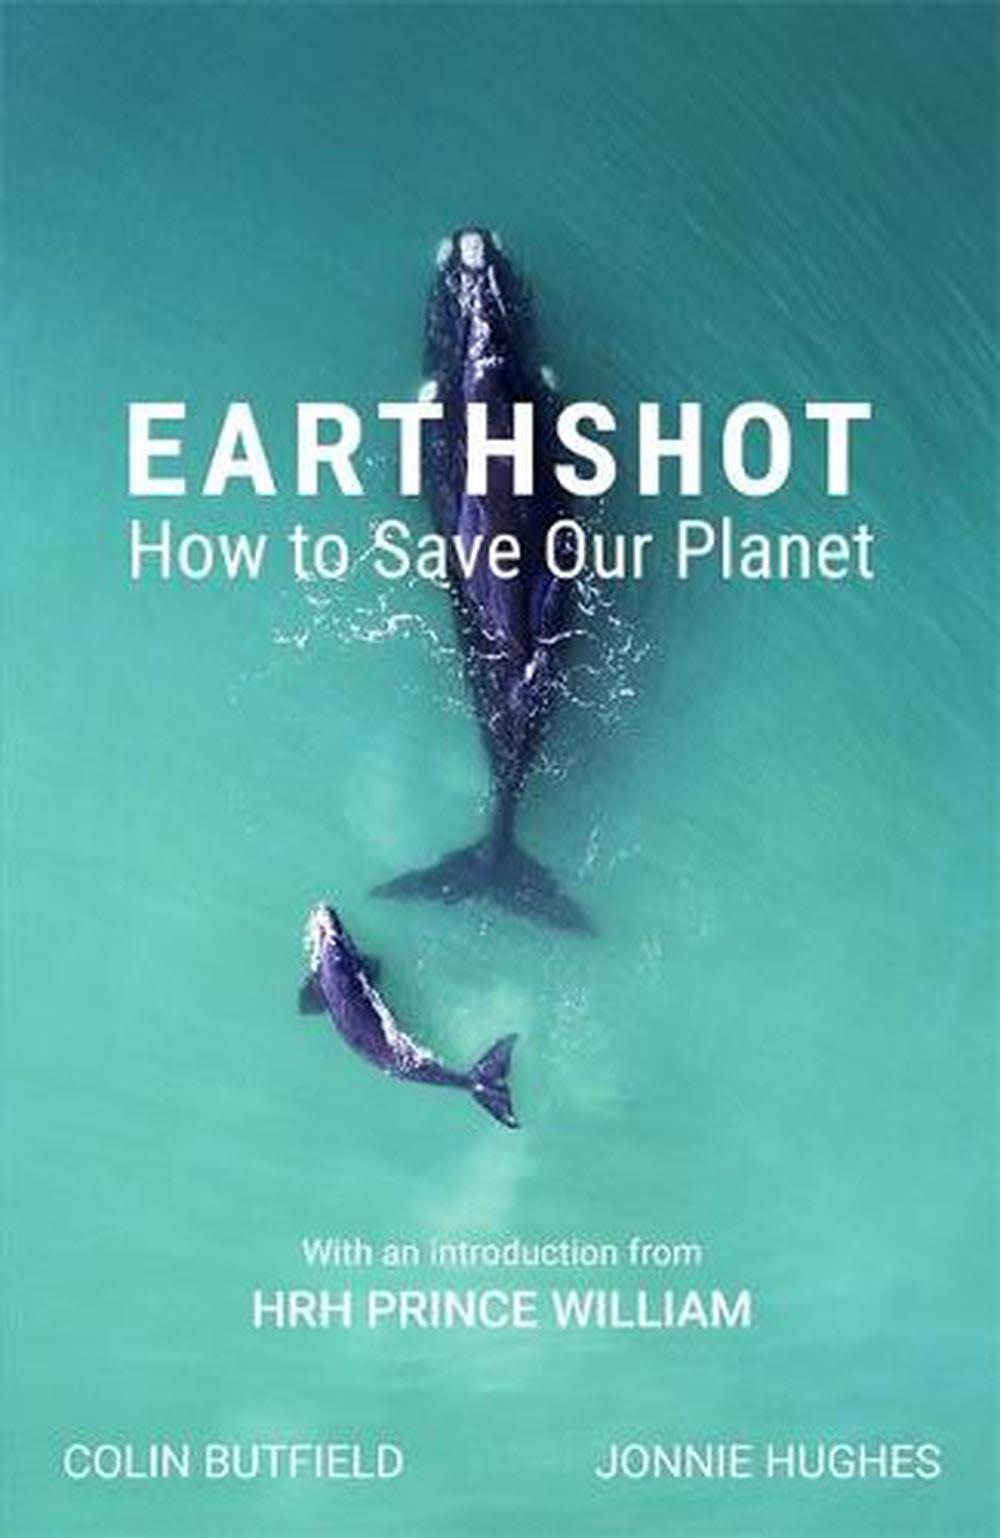 Earthshot by Colin Butfield